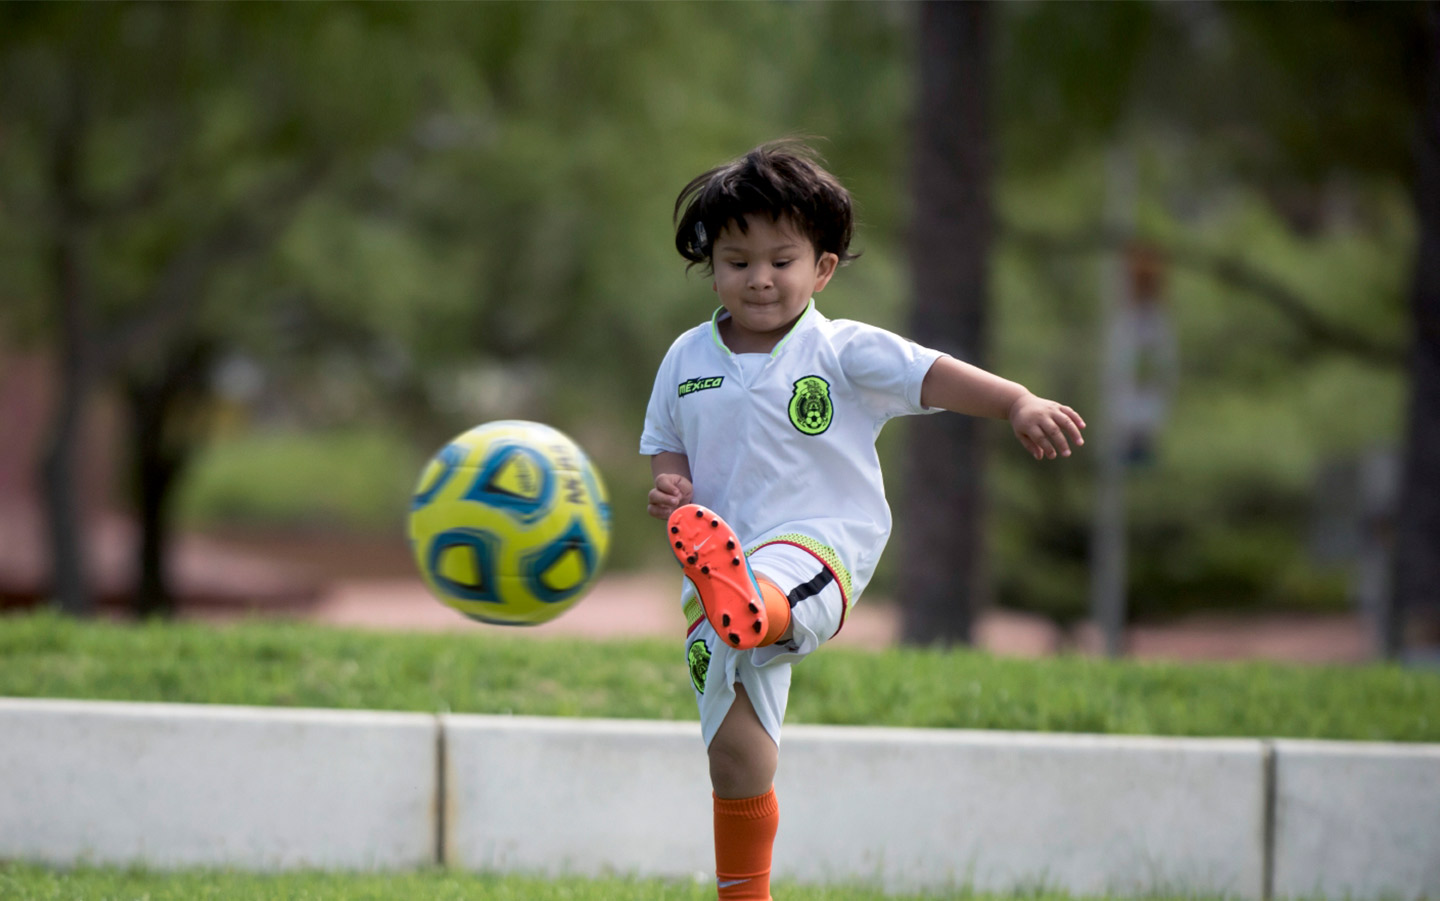 Baha 어음처리기를 착용하고 축구를 하고 있는 어린이